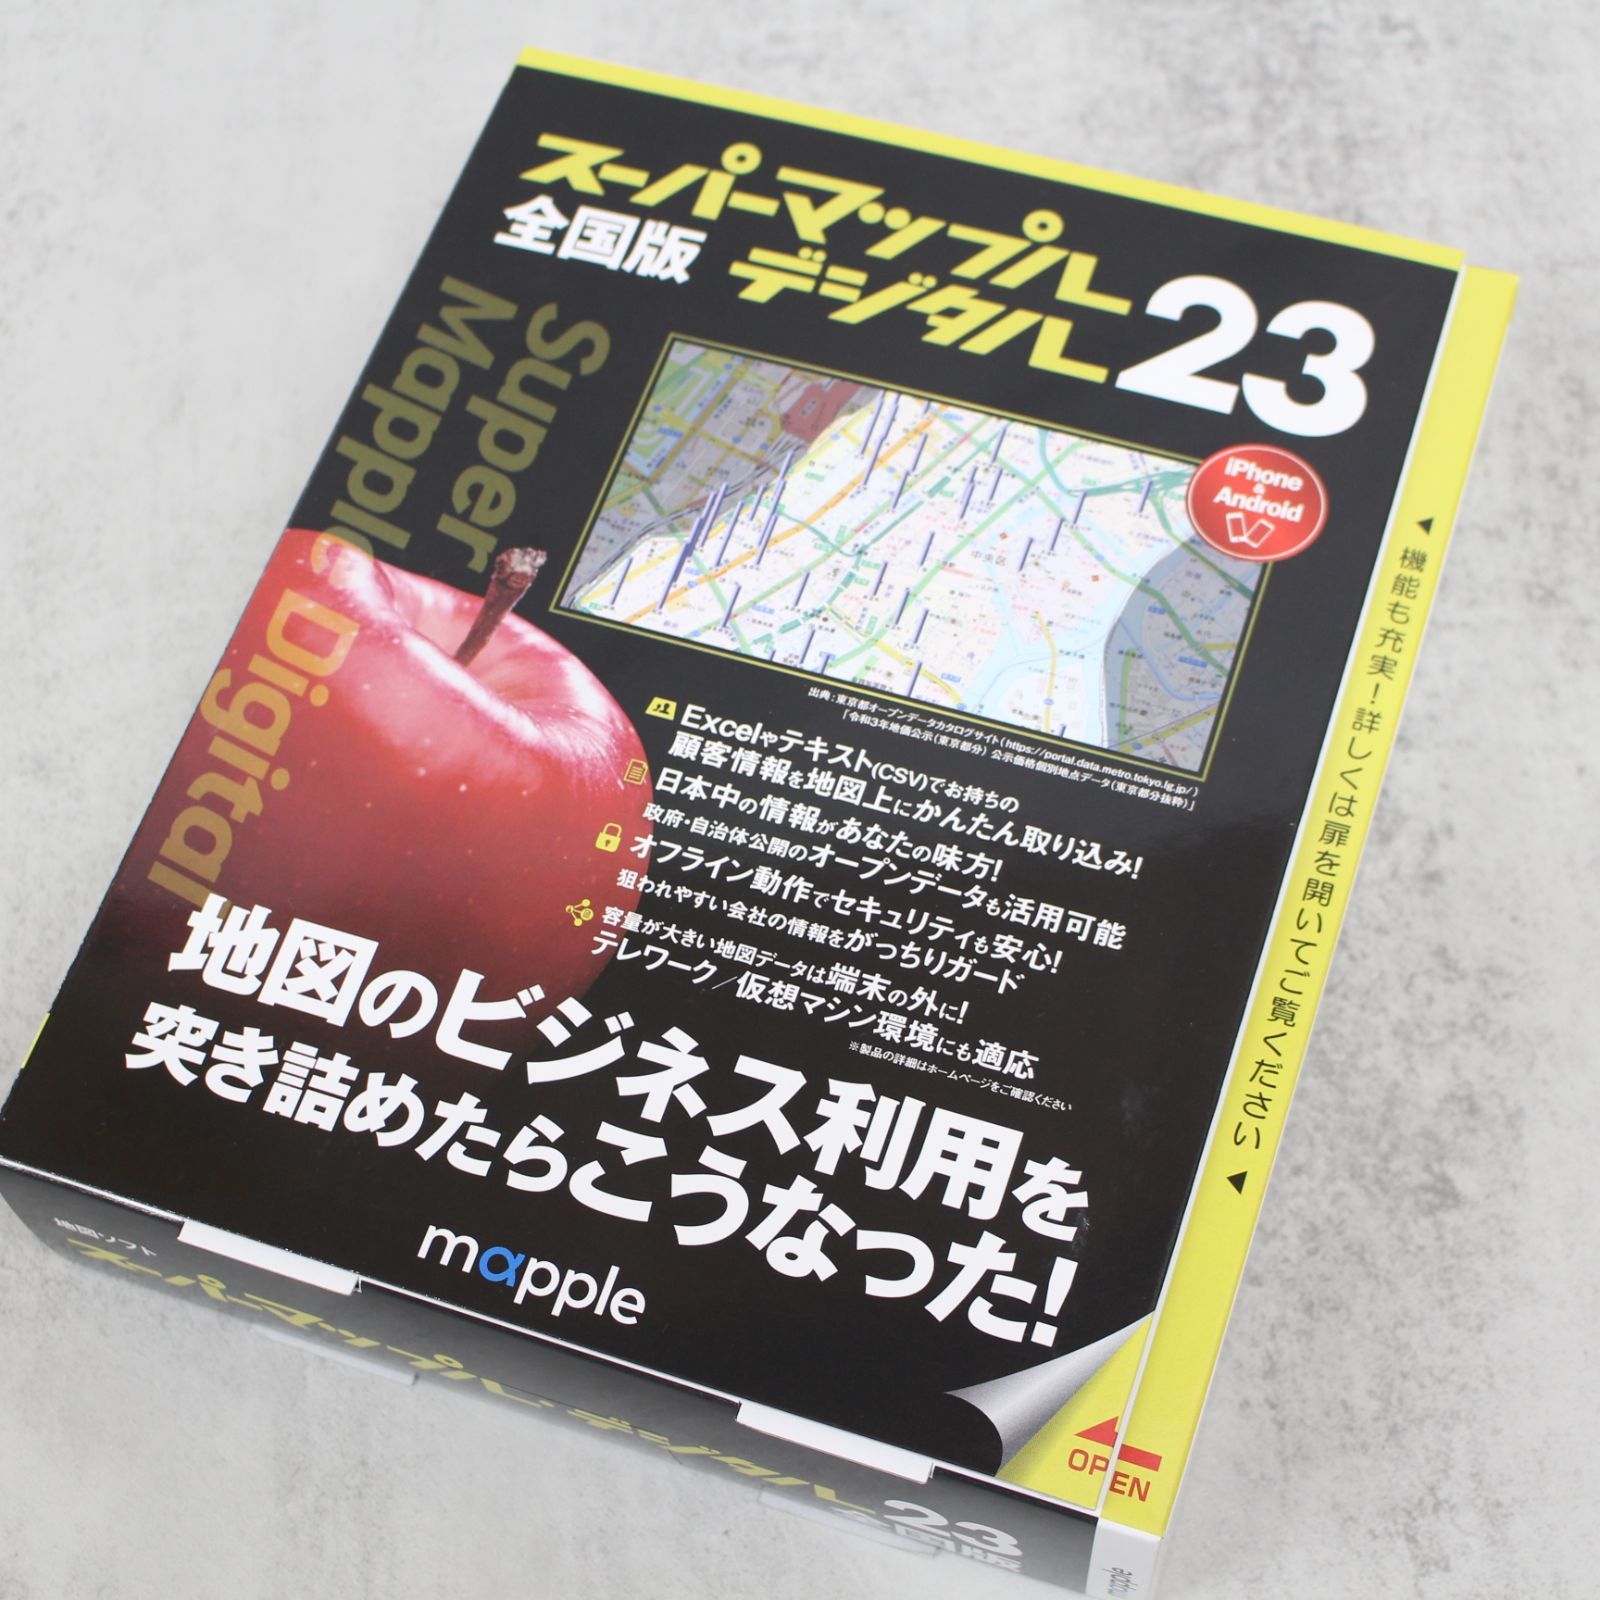 S025)【未開封】スーパーマップル デジタル 23 全国版 Windowsソフト 